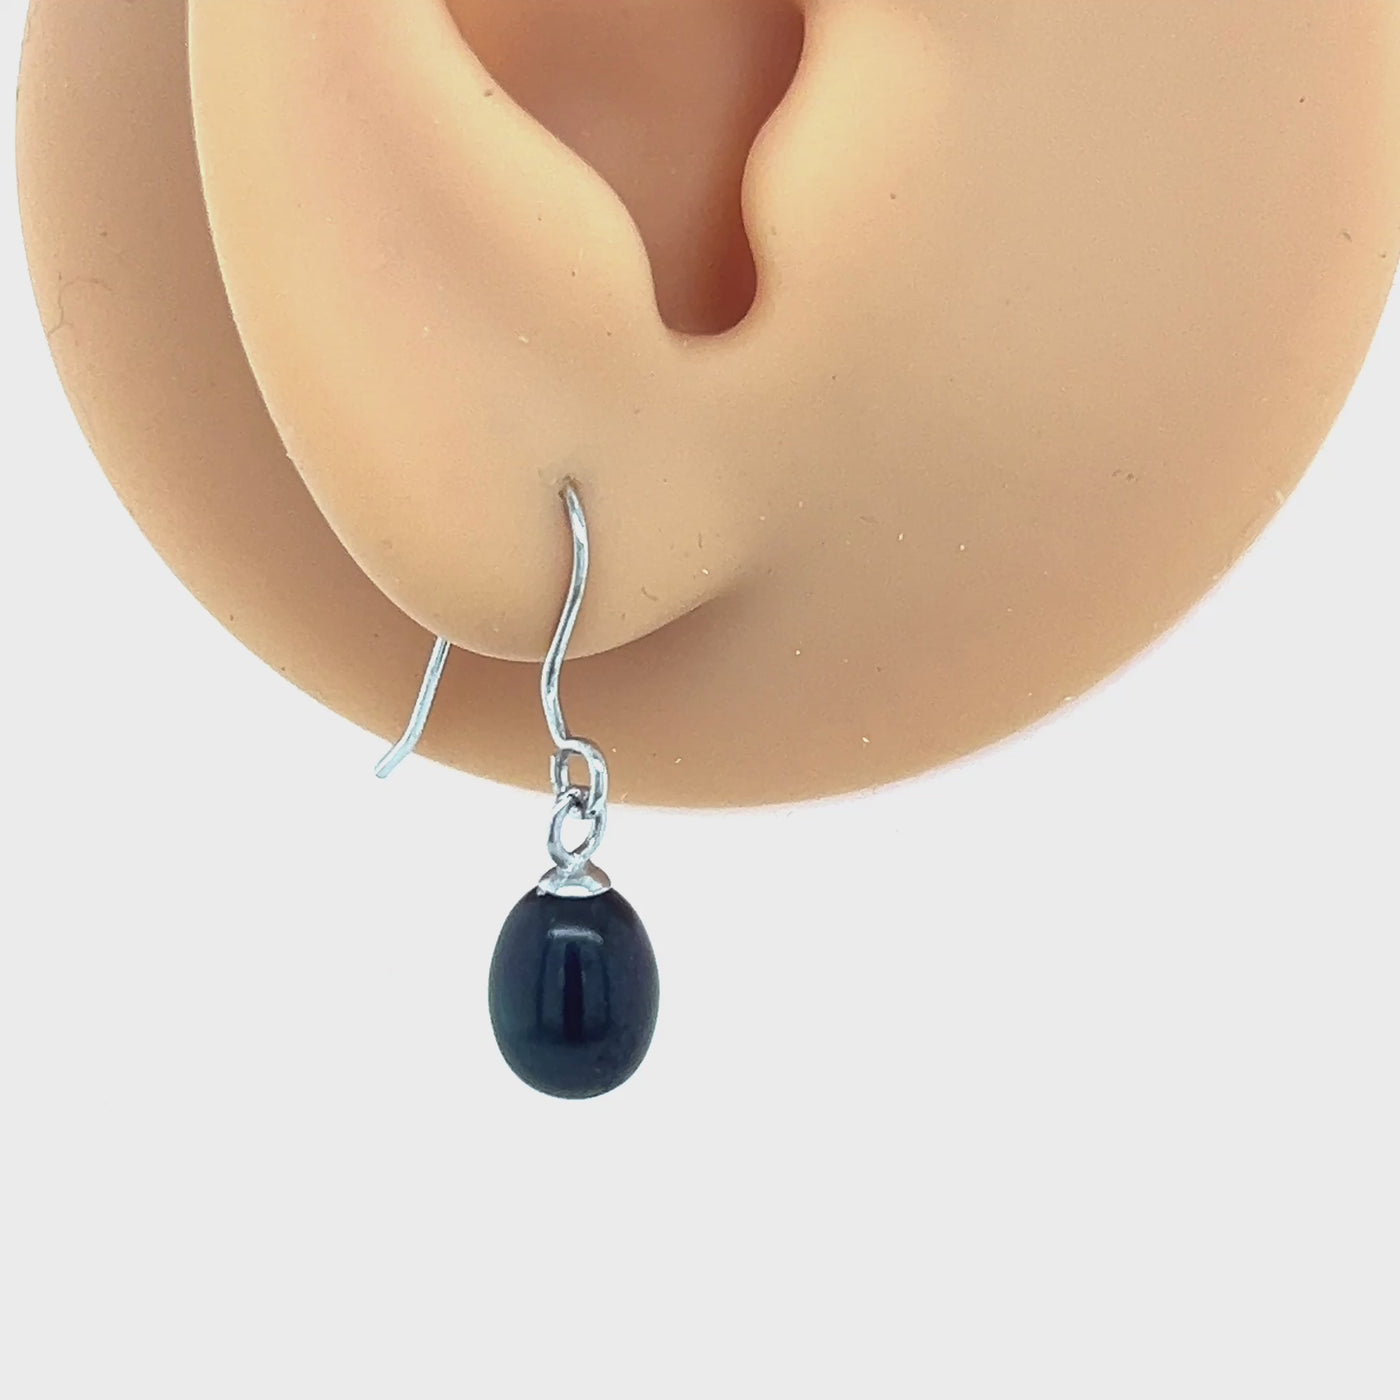 Sterling Silver Black Freshwater Pearl Drop Earrings